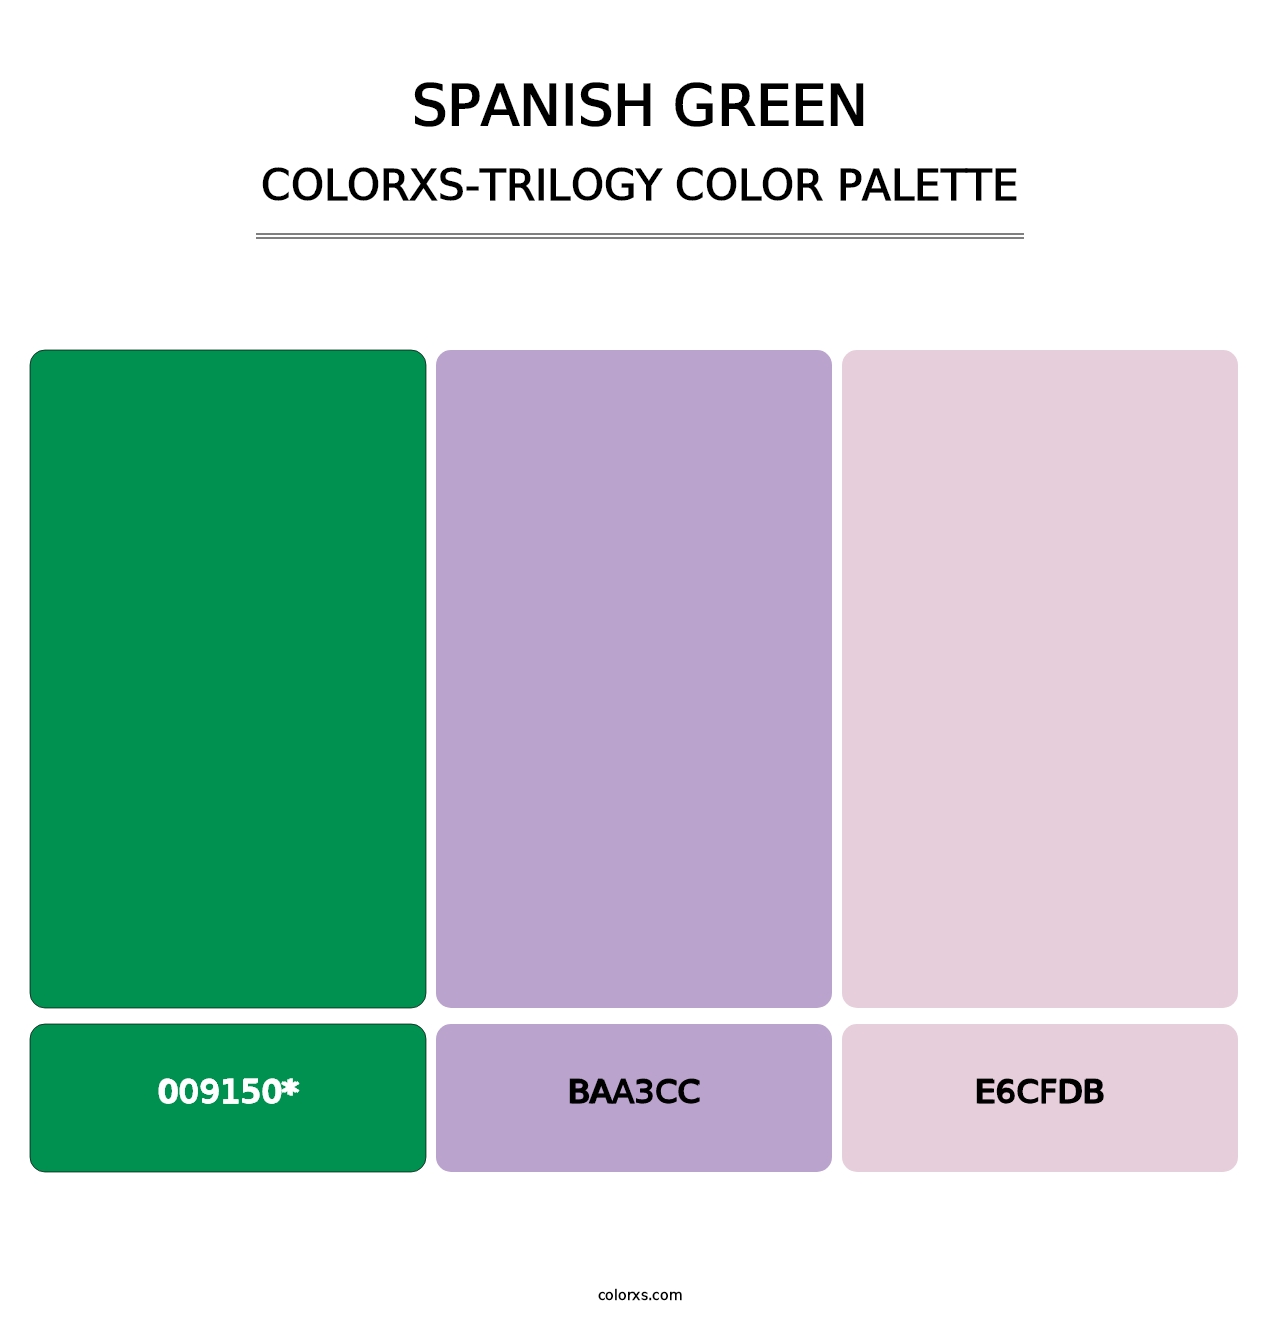 Spanish Green - Colorxs Trilogy Palette